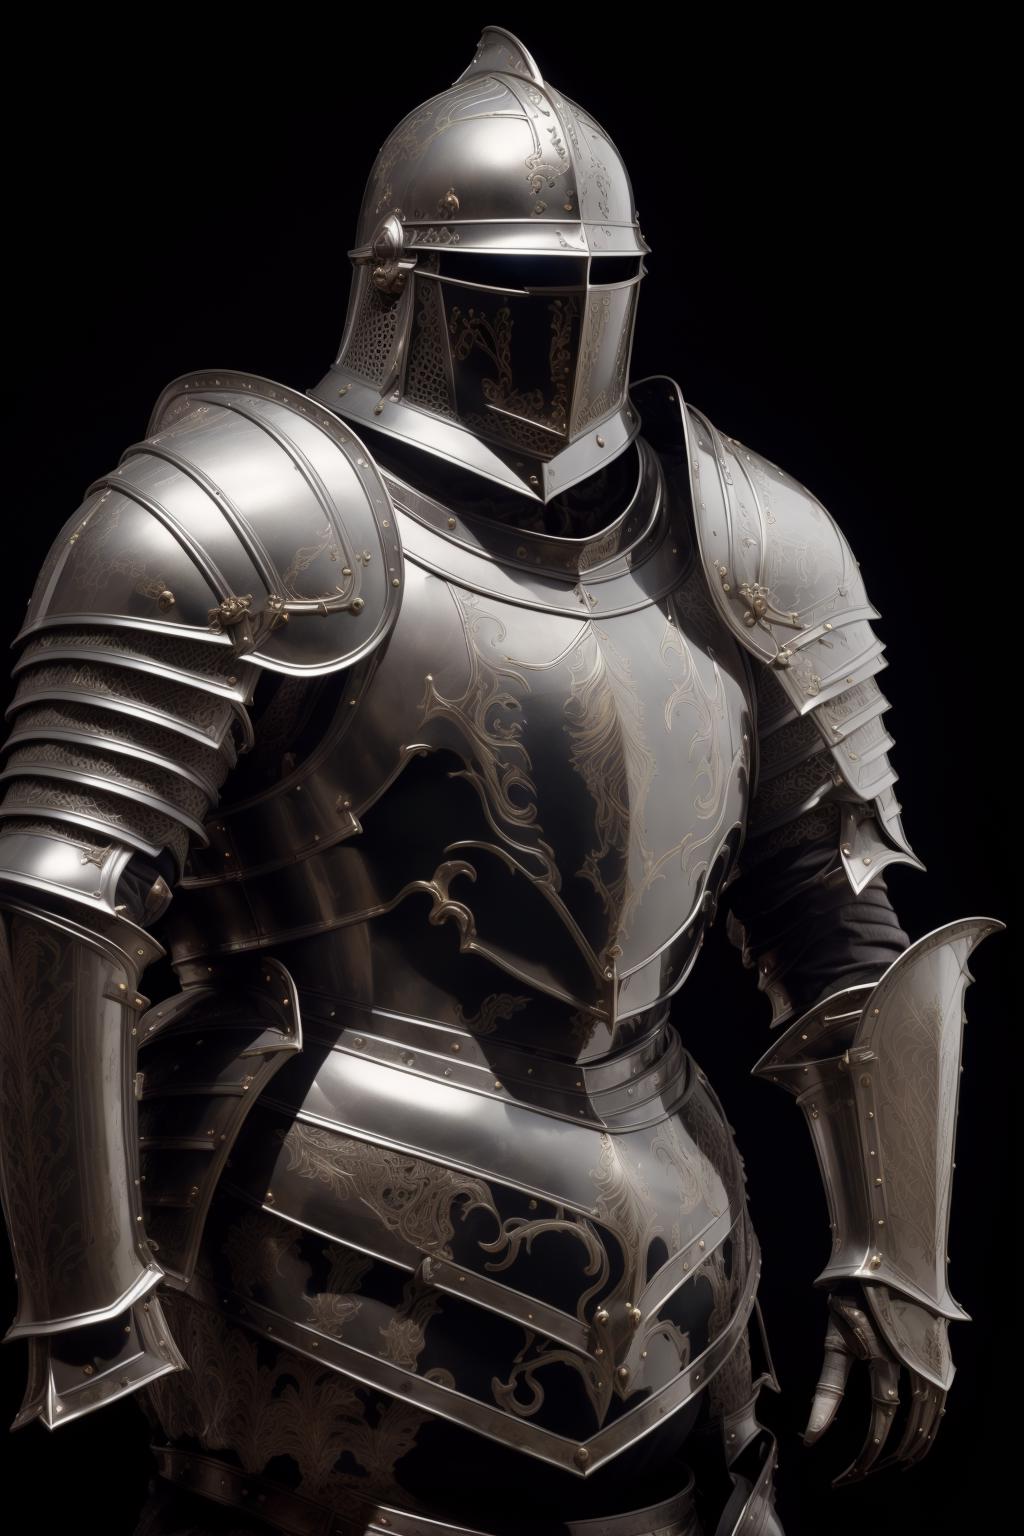 Medieval Style Armor Suit(中世纪风格铠甲套装) - v2.0 | Stable 